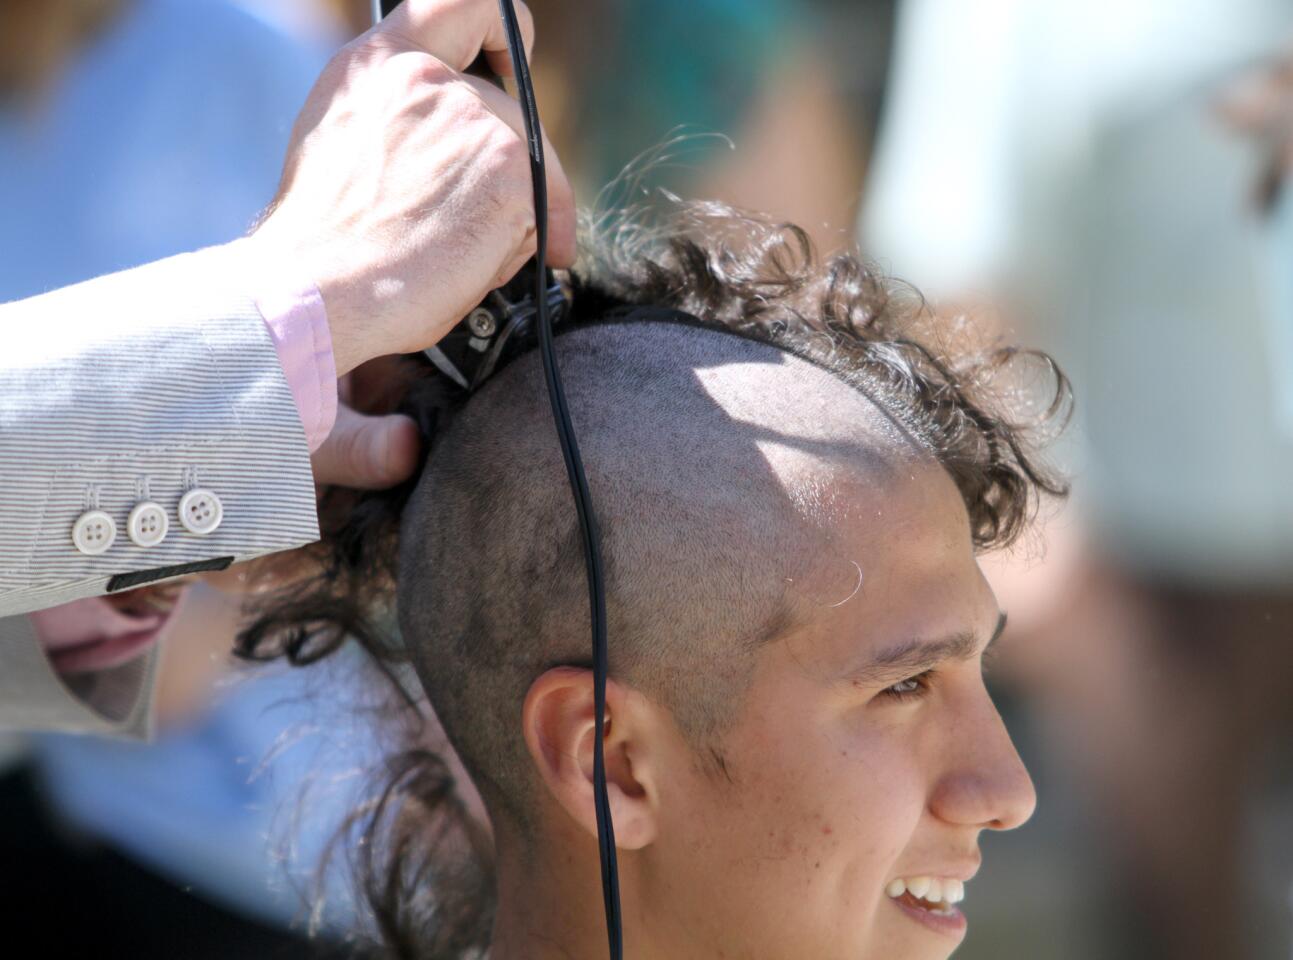 Photo Gallery: La Cañada High School students raise money by shaving heads on St. Baldrick's Day